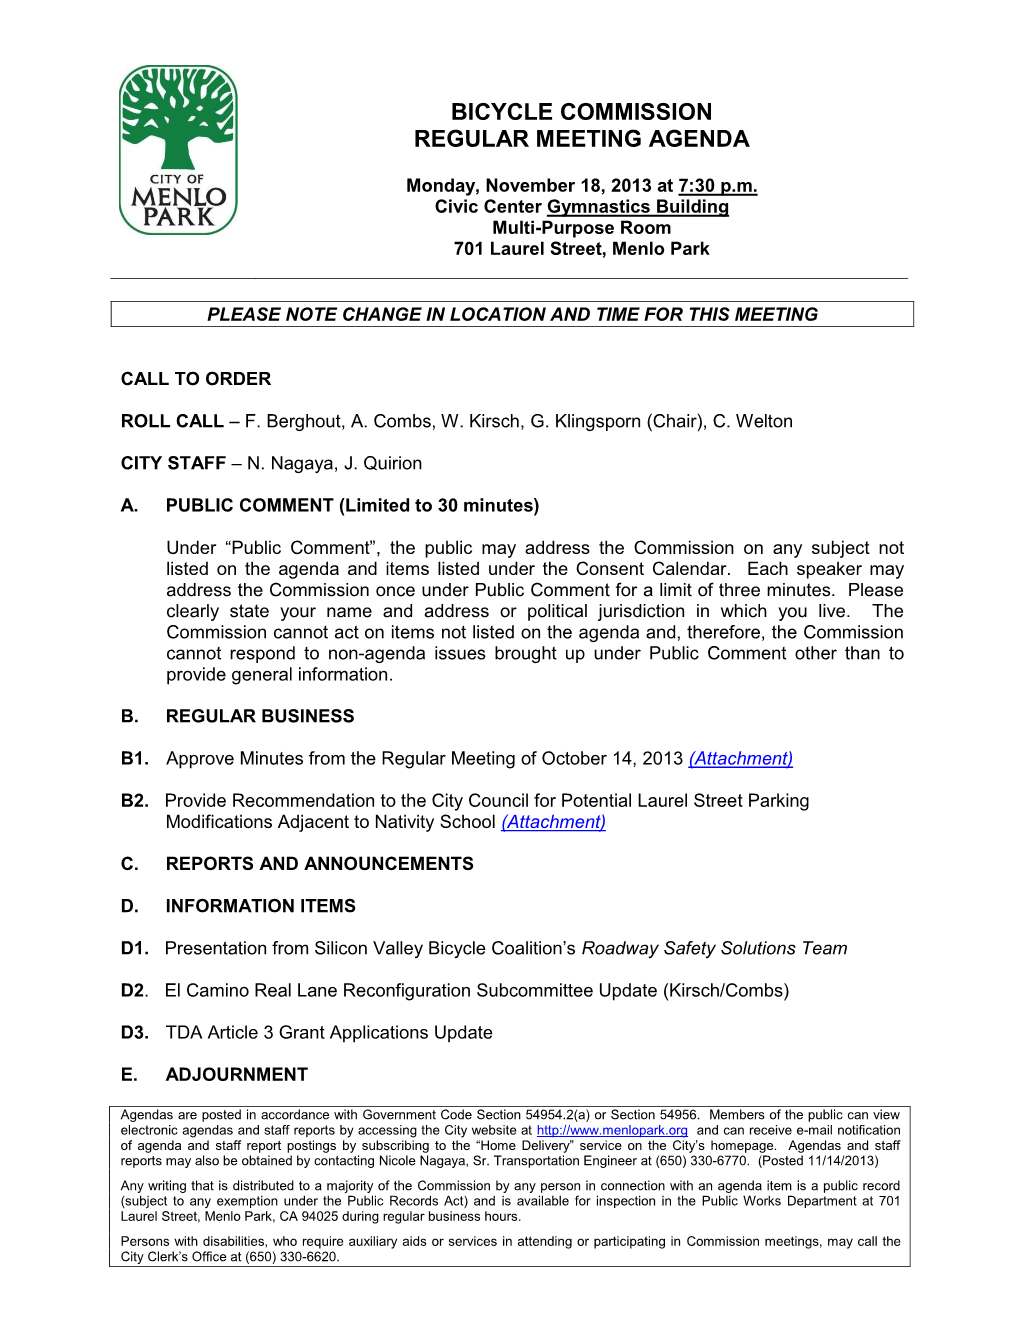 Bicycle Commission Regular Meeting Agenda